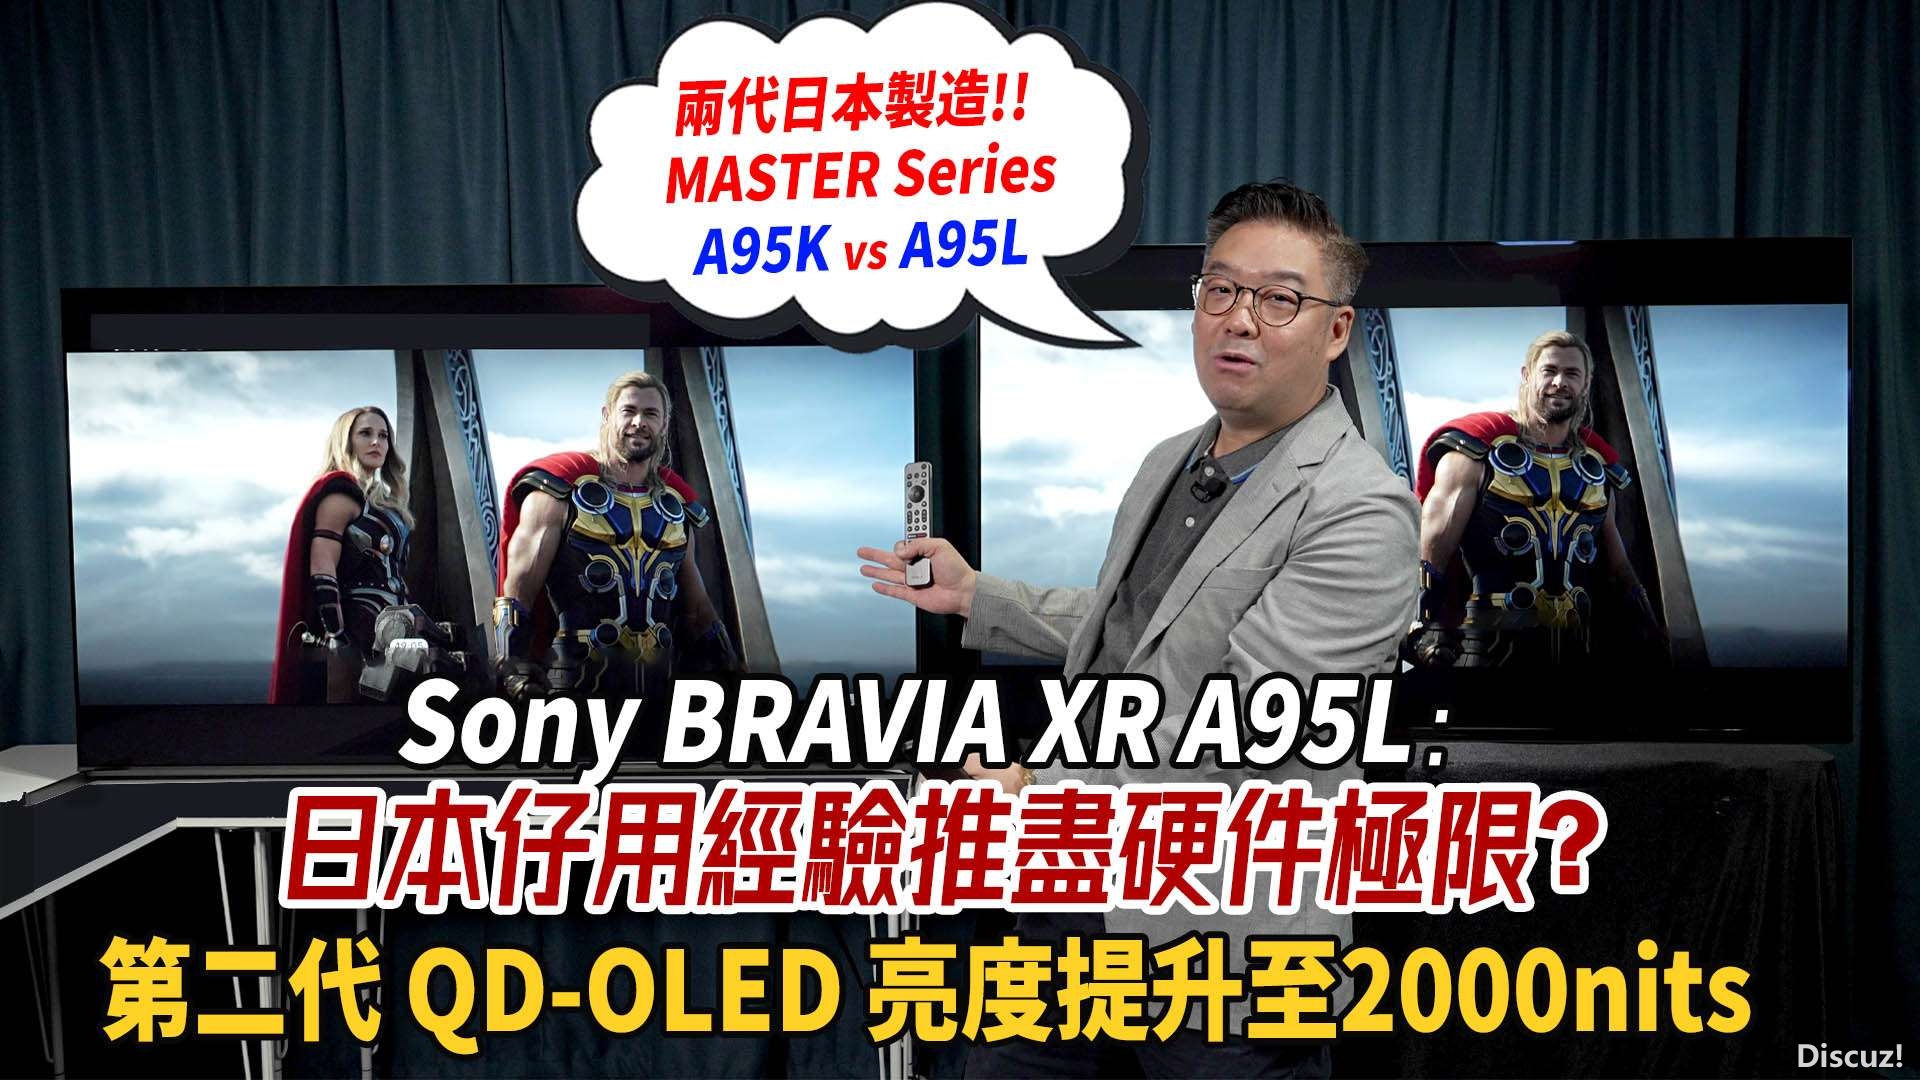 Sony A95L QD-OLED review forum copy.jpg